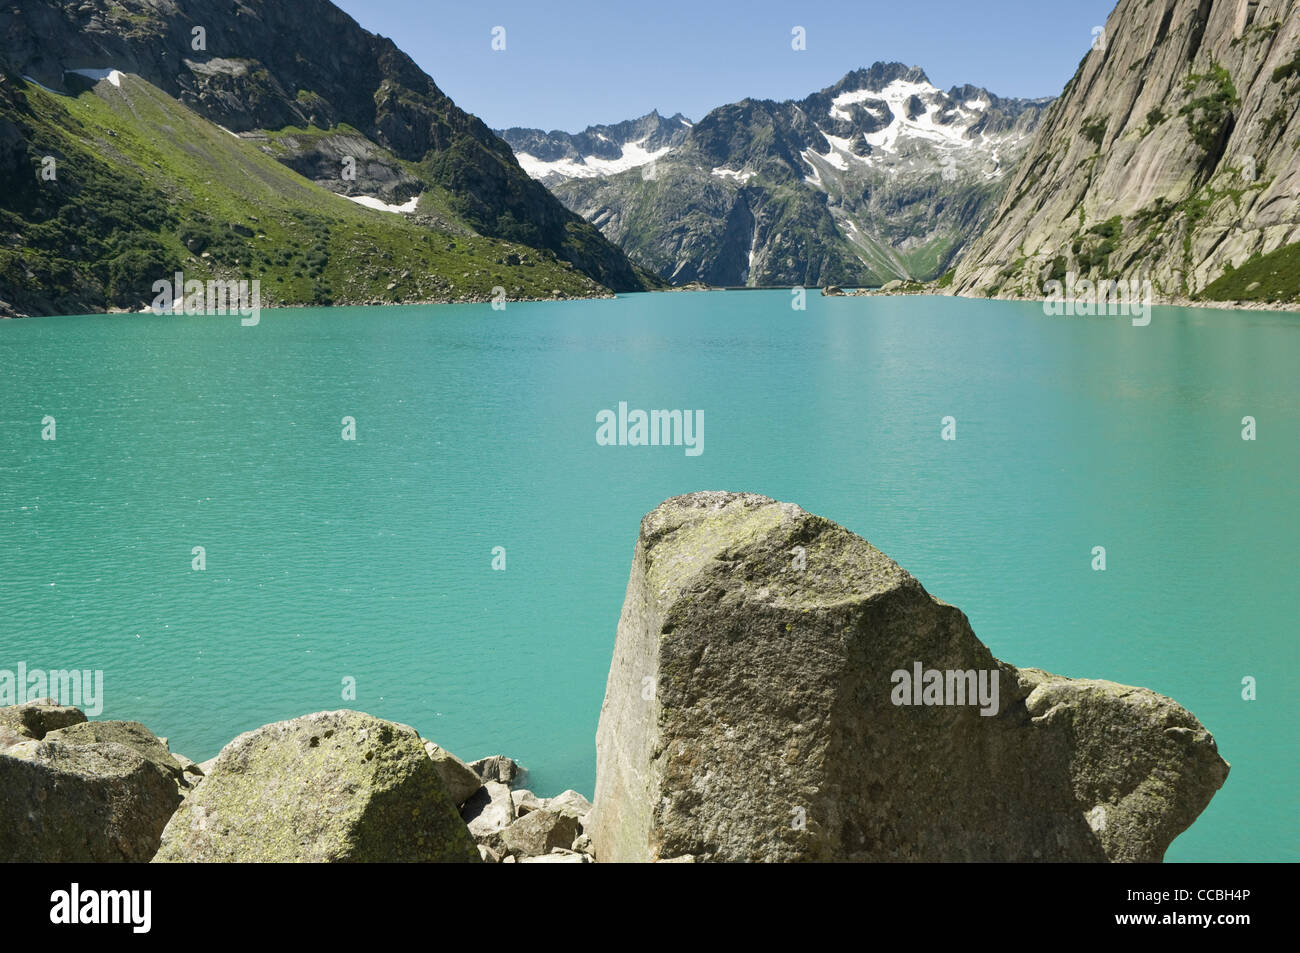 Gelmer lago e montagna alplistock, gelmersee, Svizzera Foto Stock